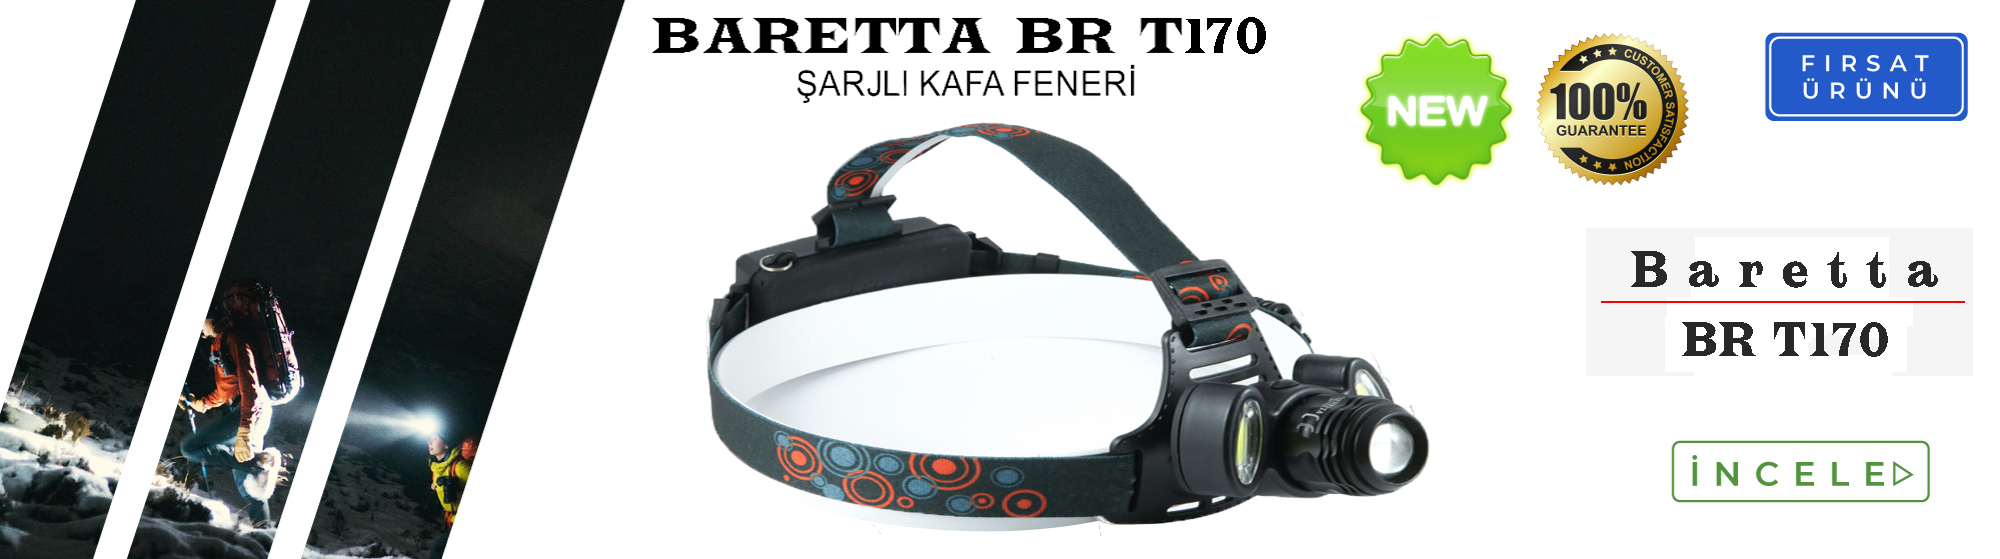 BARNETTA BR T170 Cree T6 Led Profesyonel Kafa Feneri